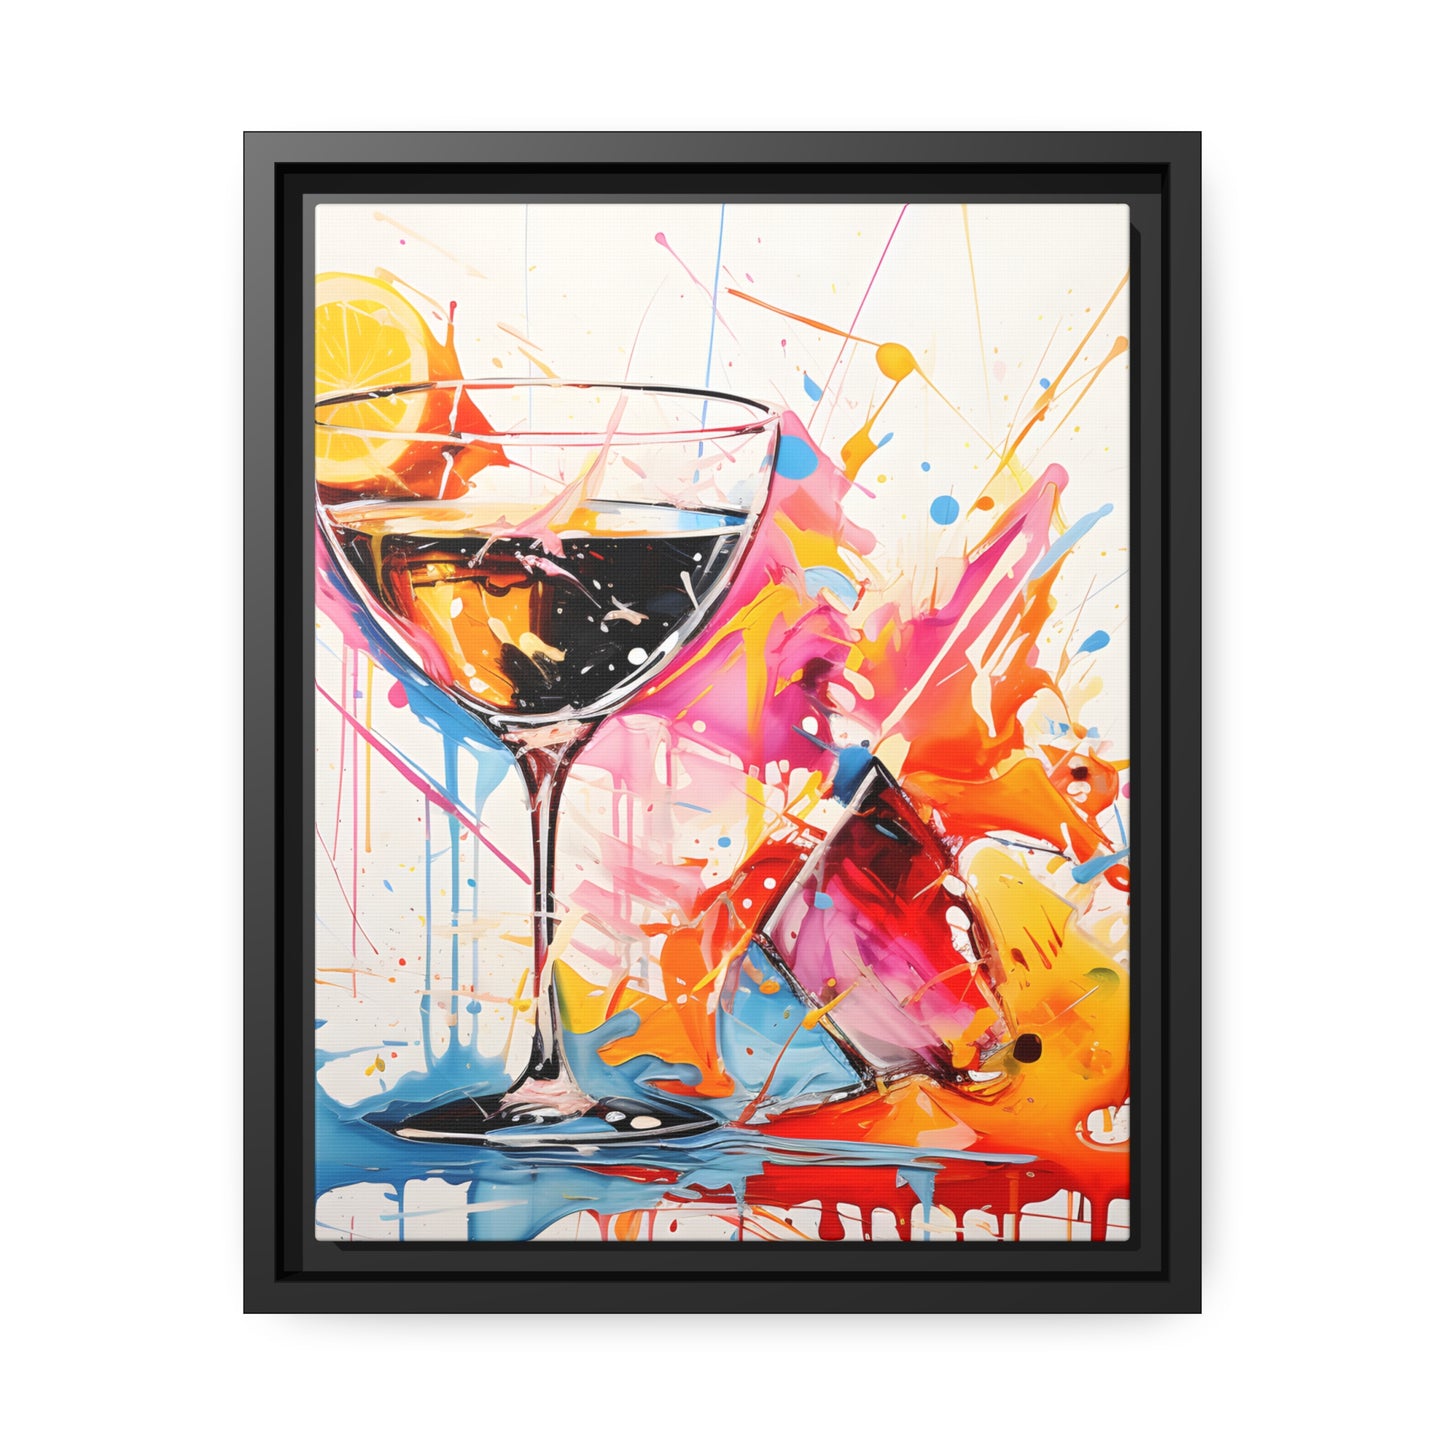 Framed Canvas Artwork Bright Vibrant Splashes Of Color Over A White Background Surrounding A Glass Of Liquor Alcohol Lemon Slice Floating Frame Canvas Artwork